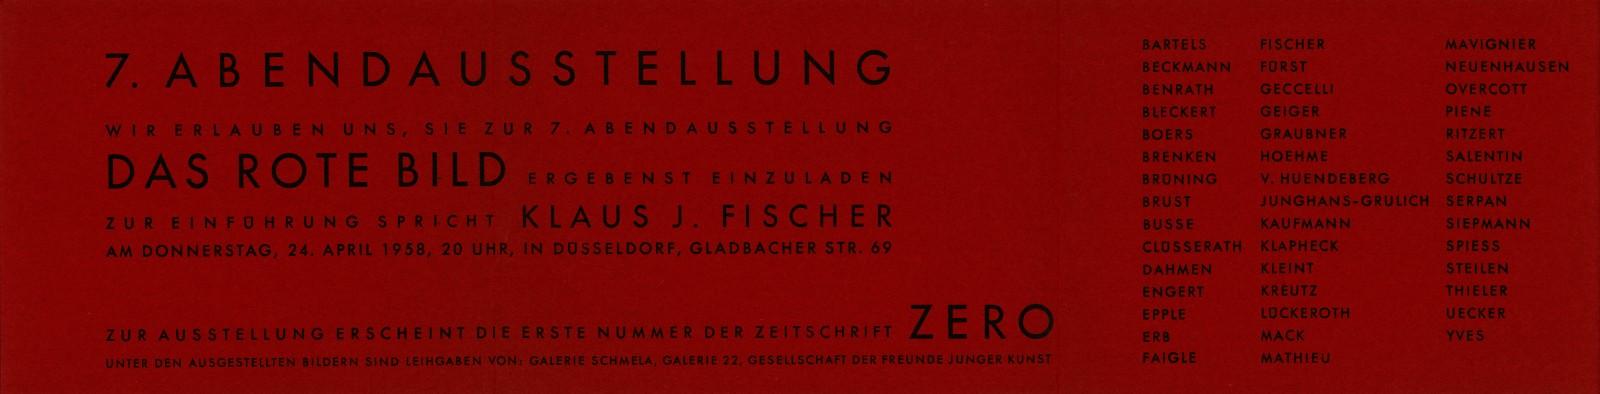 Carton d'invitation de l'exposition "Das Rote Bild », Düsseldorf, 1957